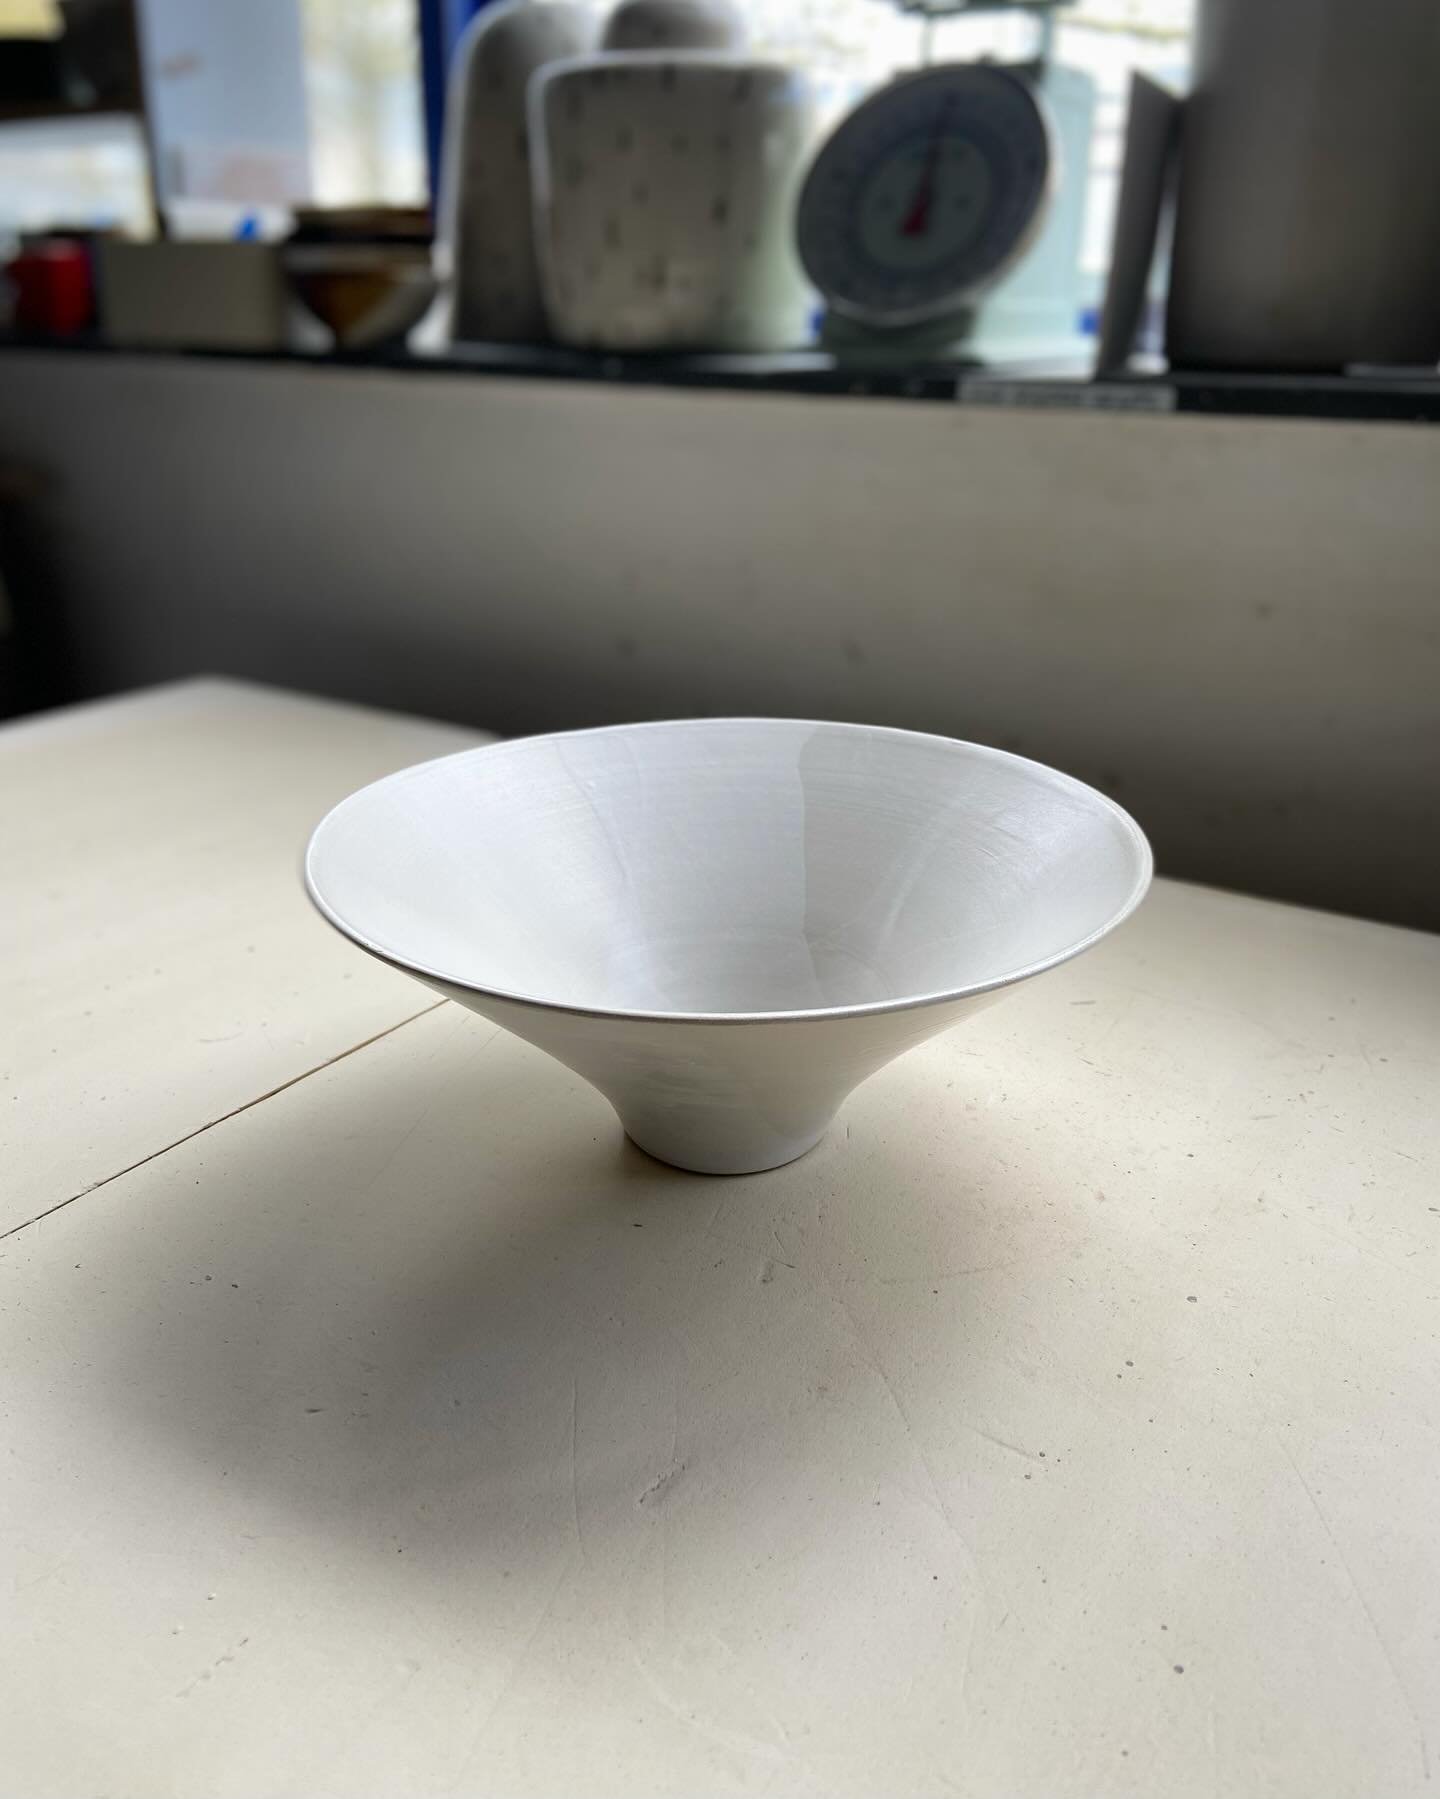 Thursday kiln unload - porcelain vessels, larger shapes and celadons with oxide rims.

#wheelthrowing #porcelain #ceramics #wheelthrownporcelain